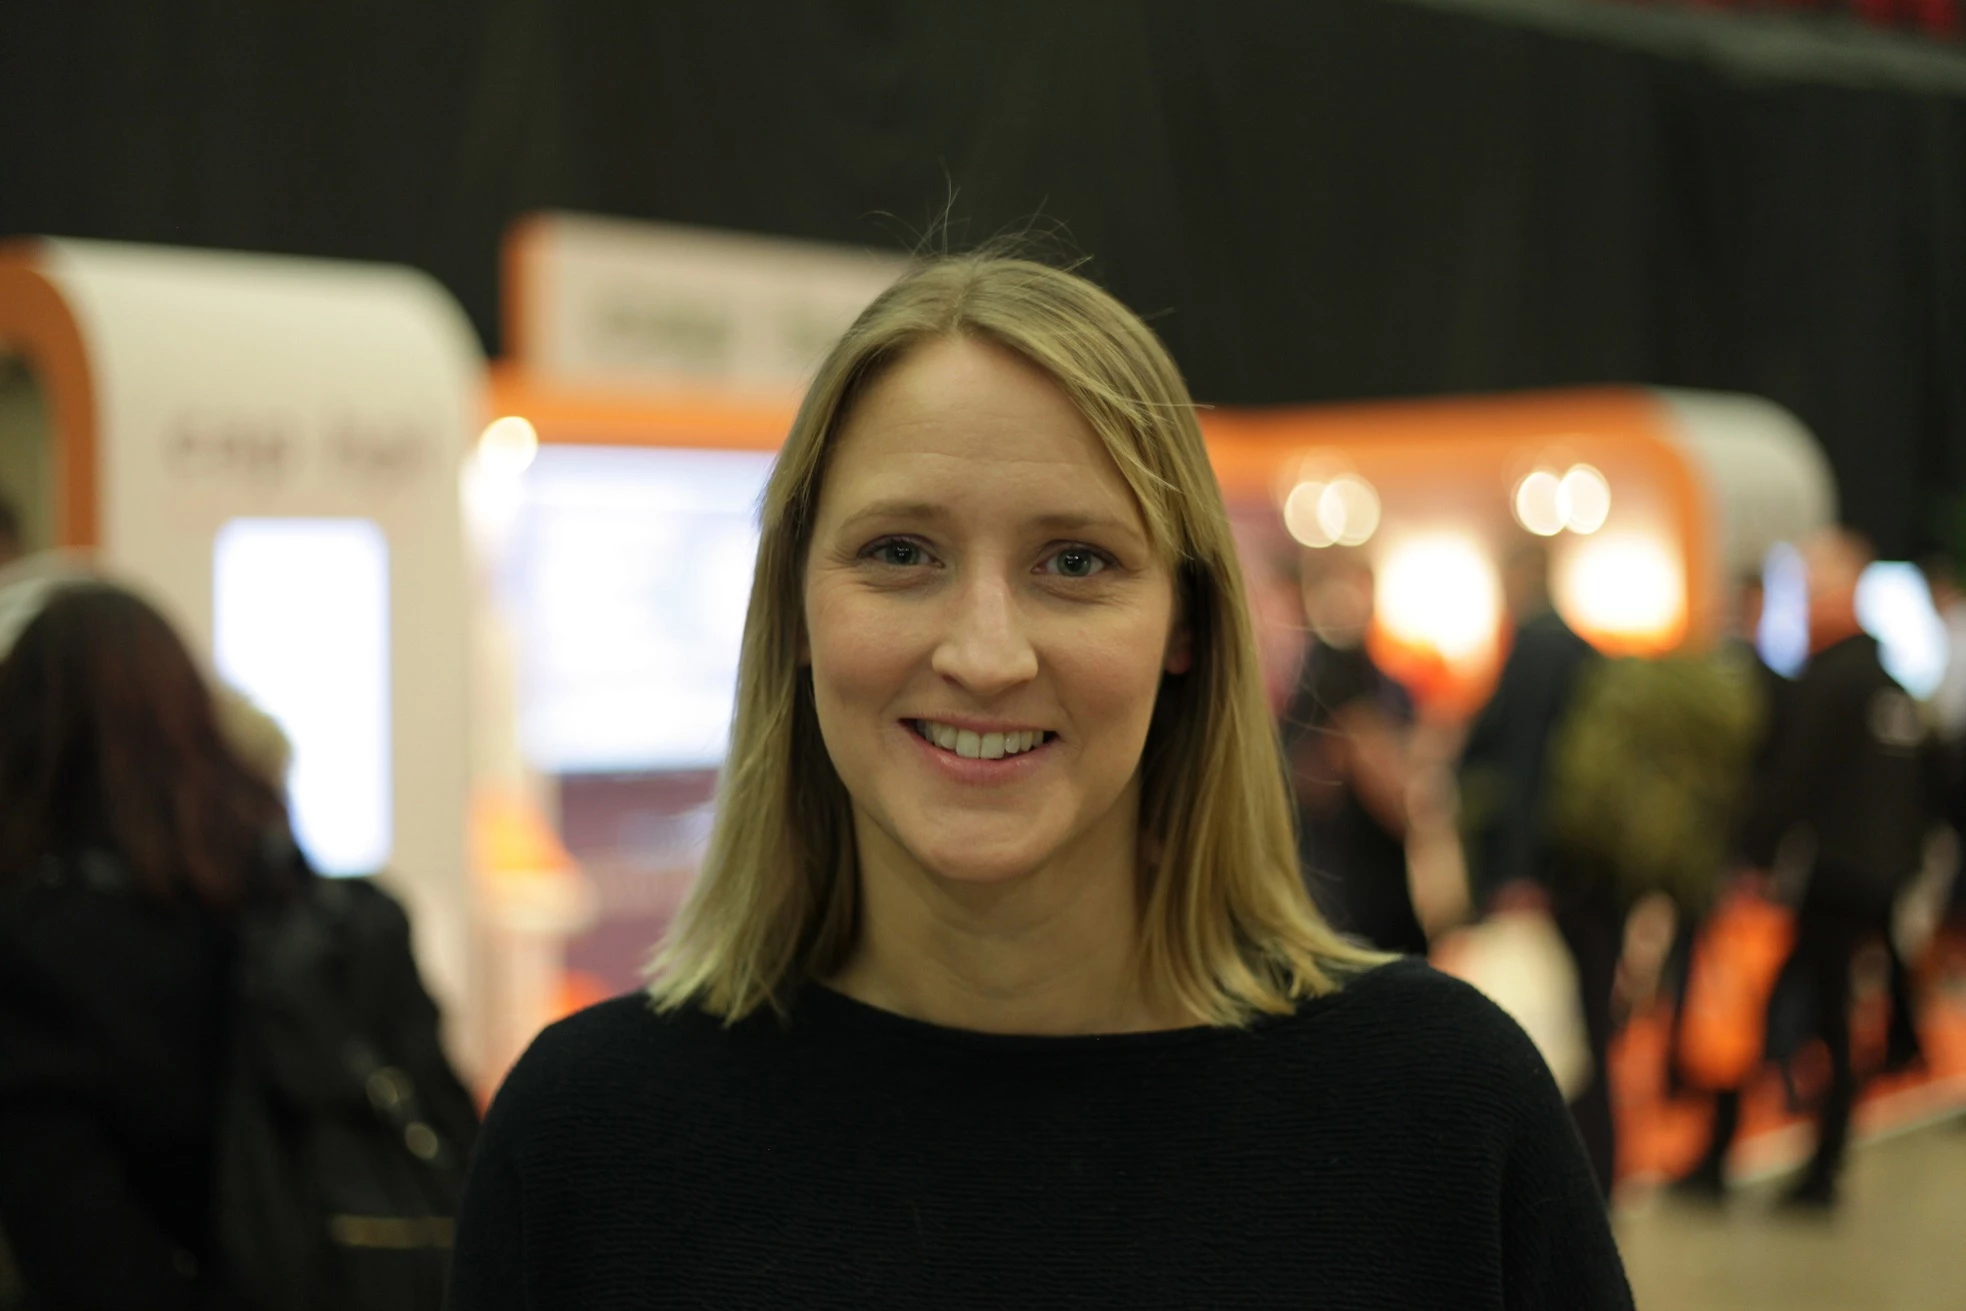 Herd founder Amy De-Balsi at Leeds Digital Job Fair 4.0